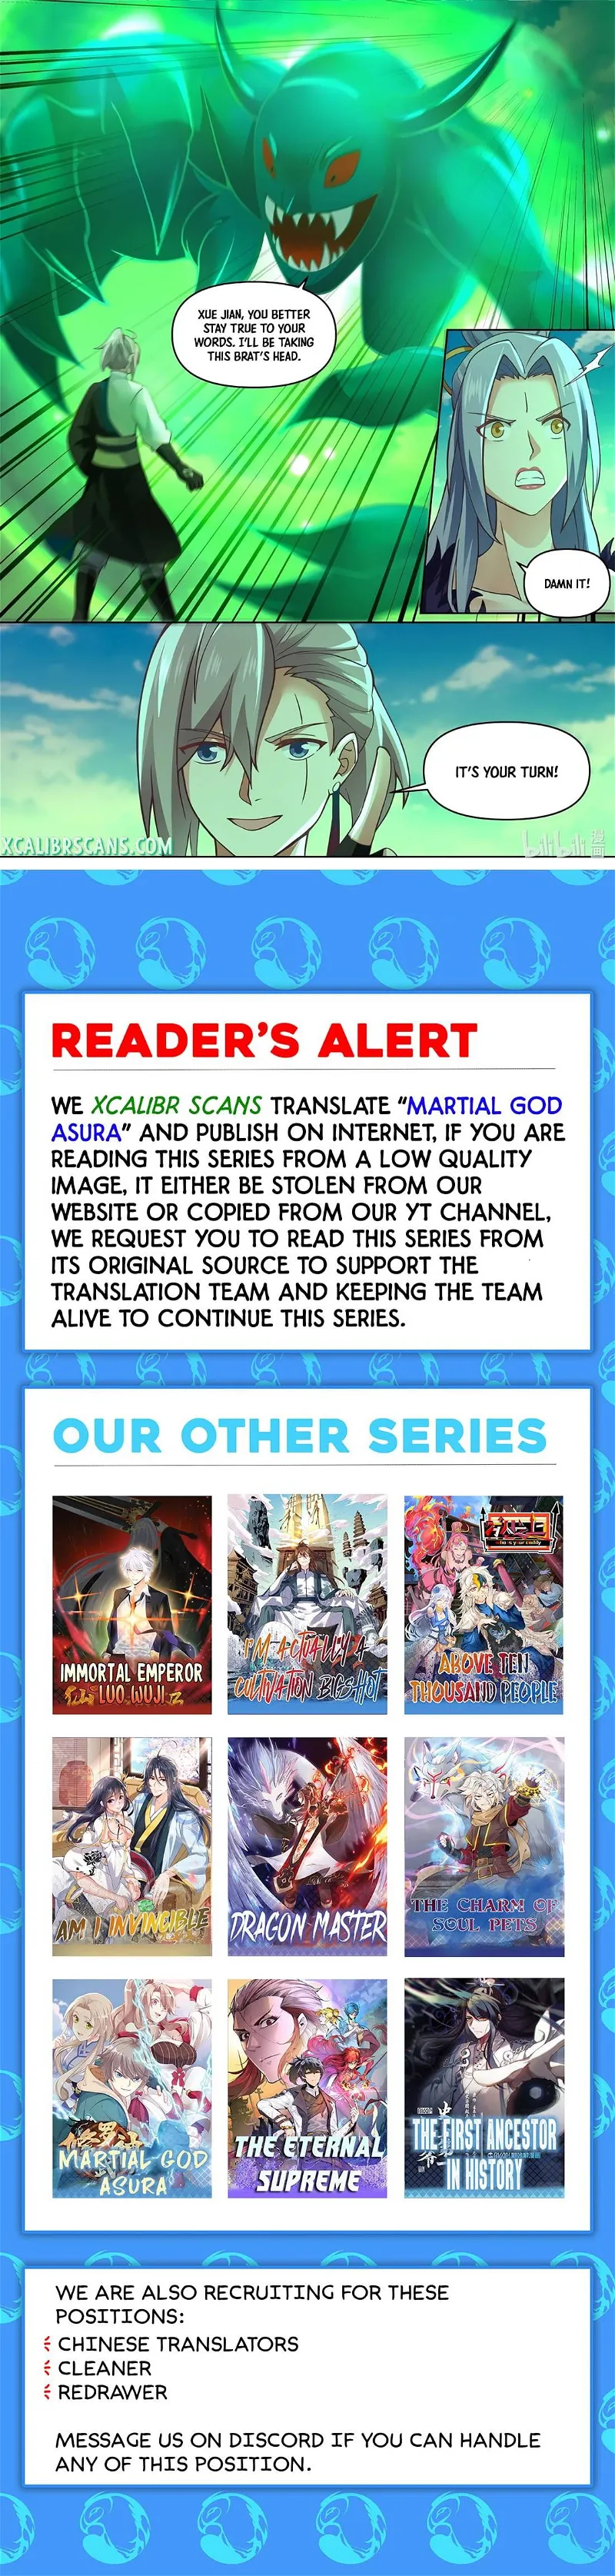 Martial God Asura Chapter 439 page 10